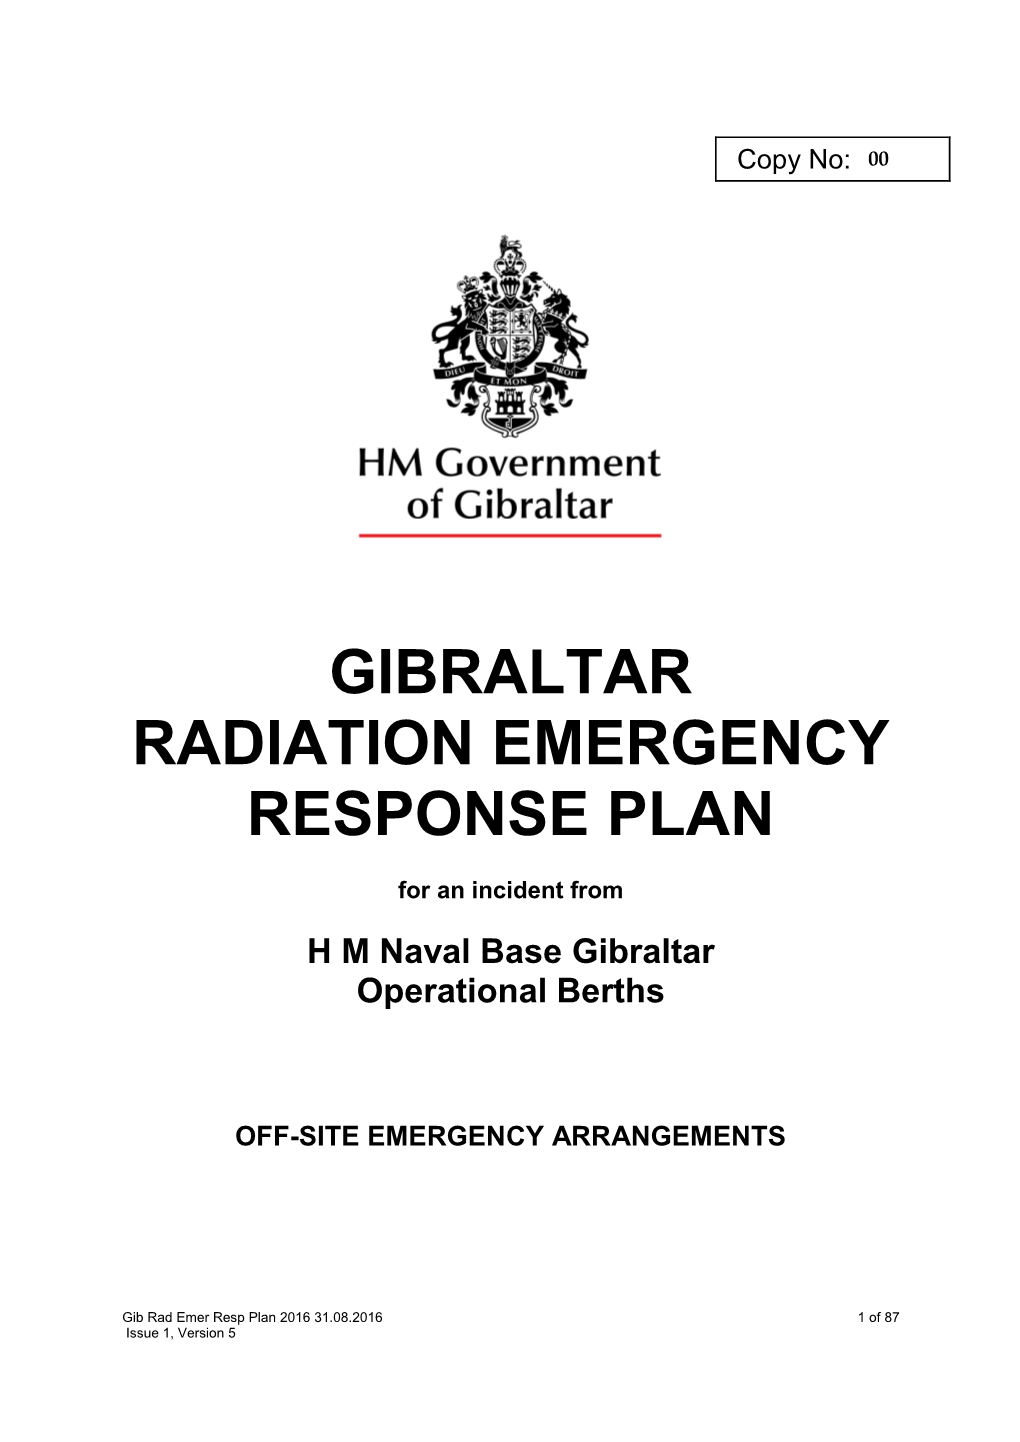 Radiation Emergency Response Plan